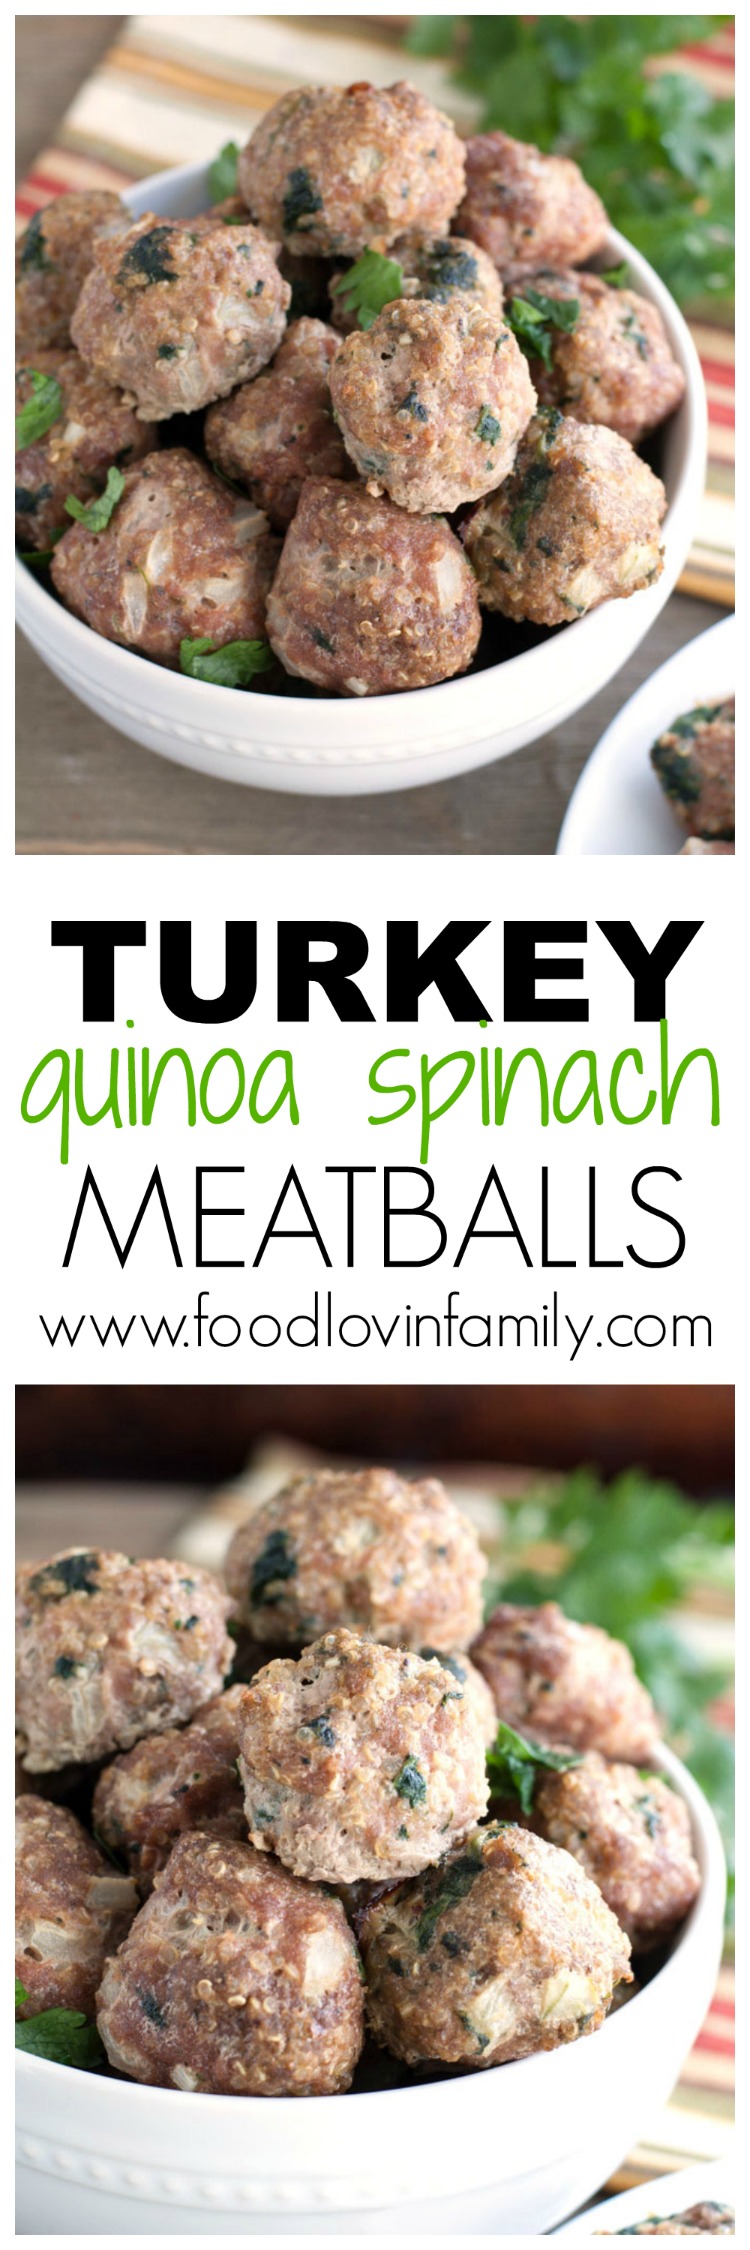 Turkey quinoa and spinach meatballs - Food Lovin Family